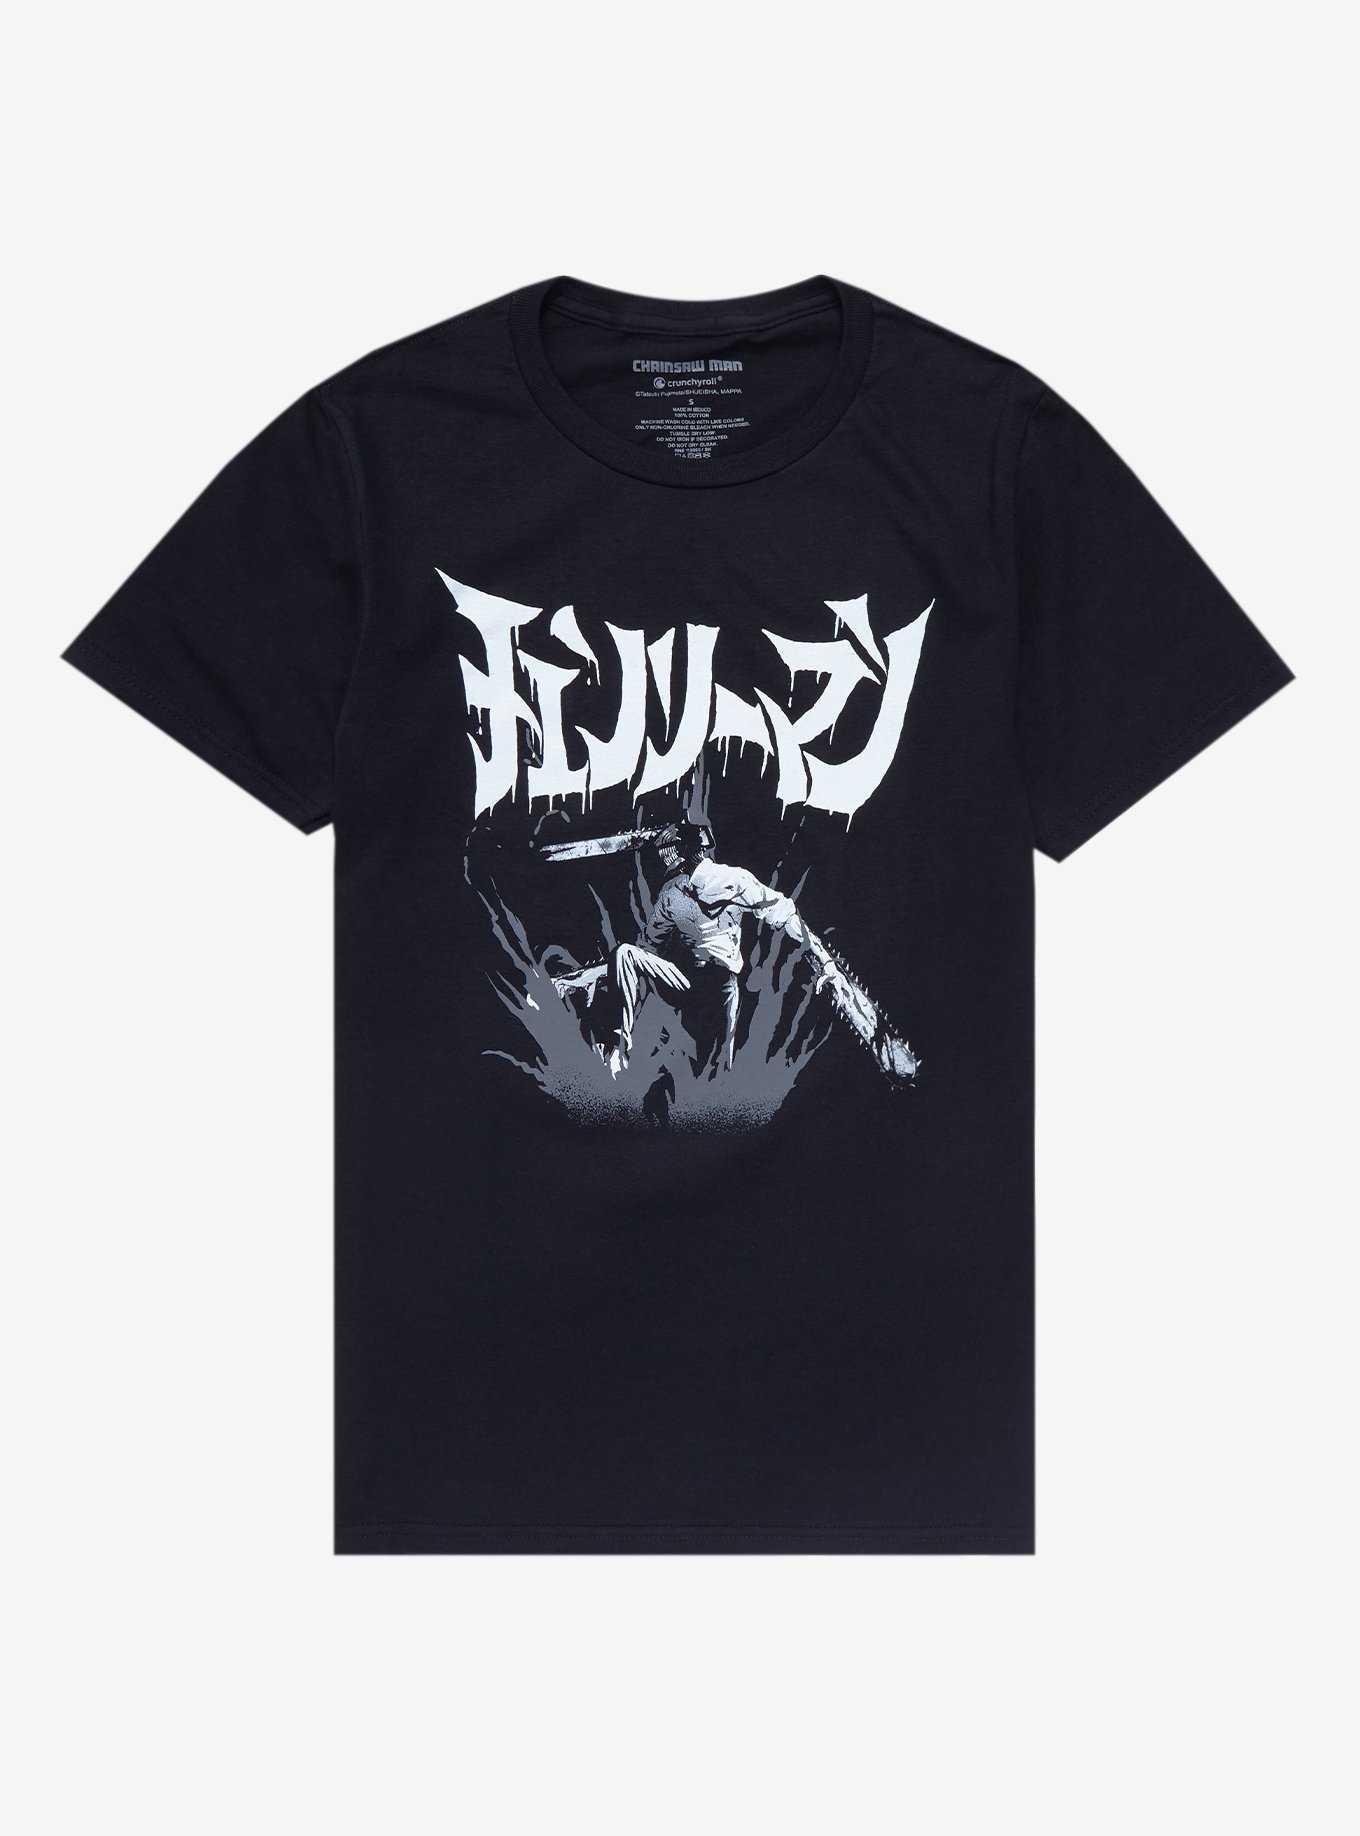 Chainsaw Man Black & White Japanese Text Boyfriend Fit Girls T-Shirt, , hi-res